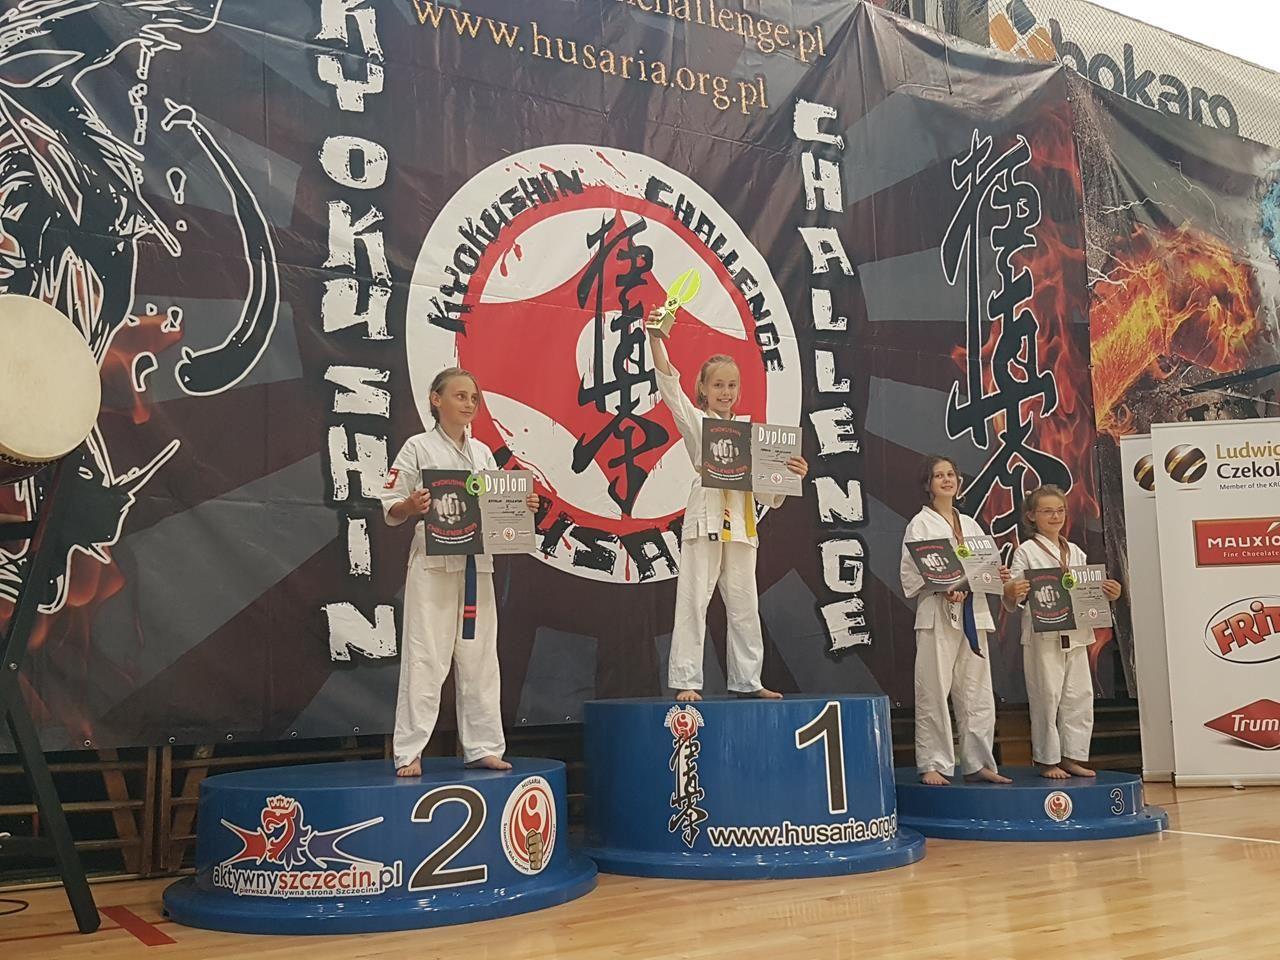 Zdj. nr. 9. Turniej Kyokushin Challenge 2019 